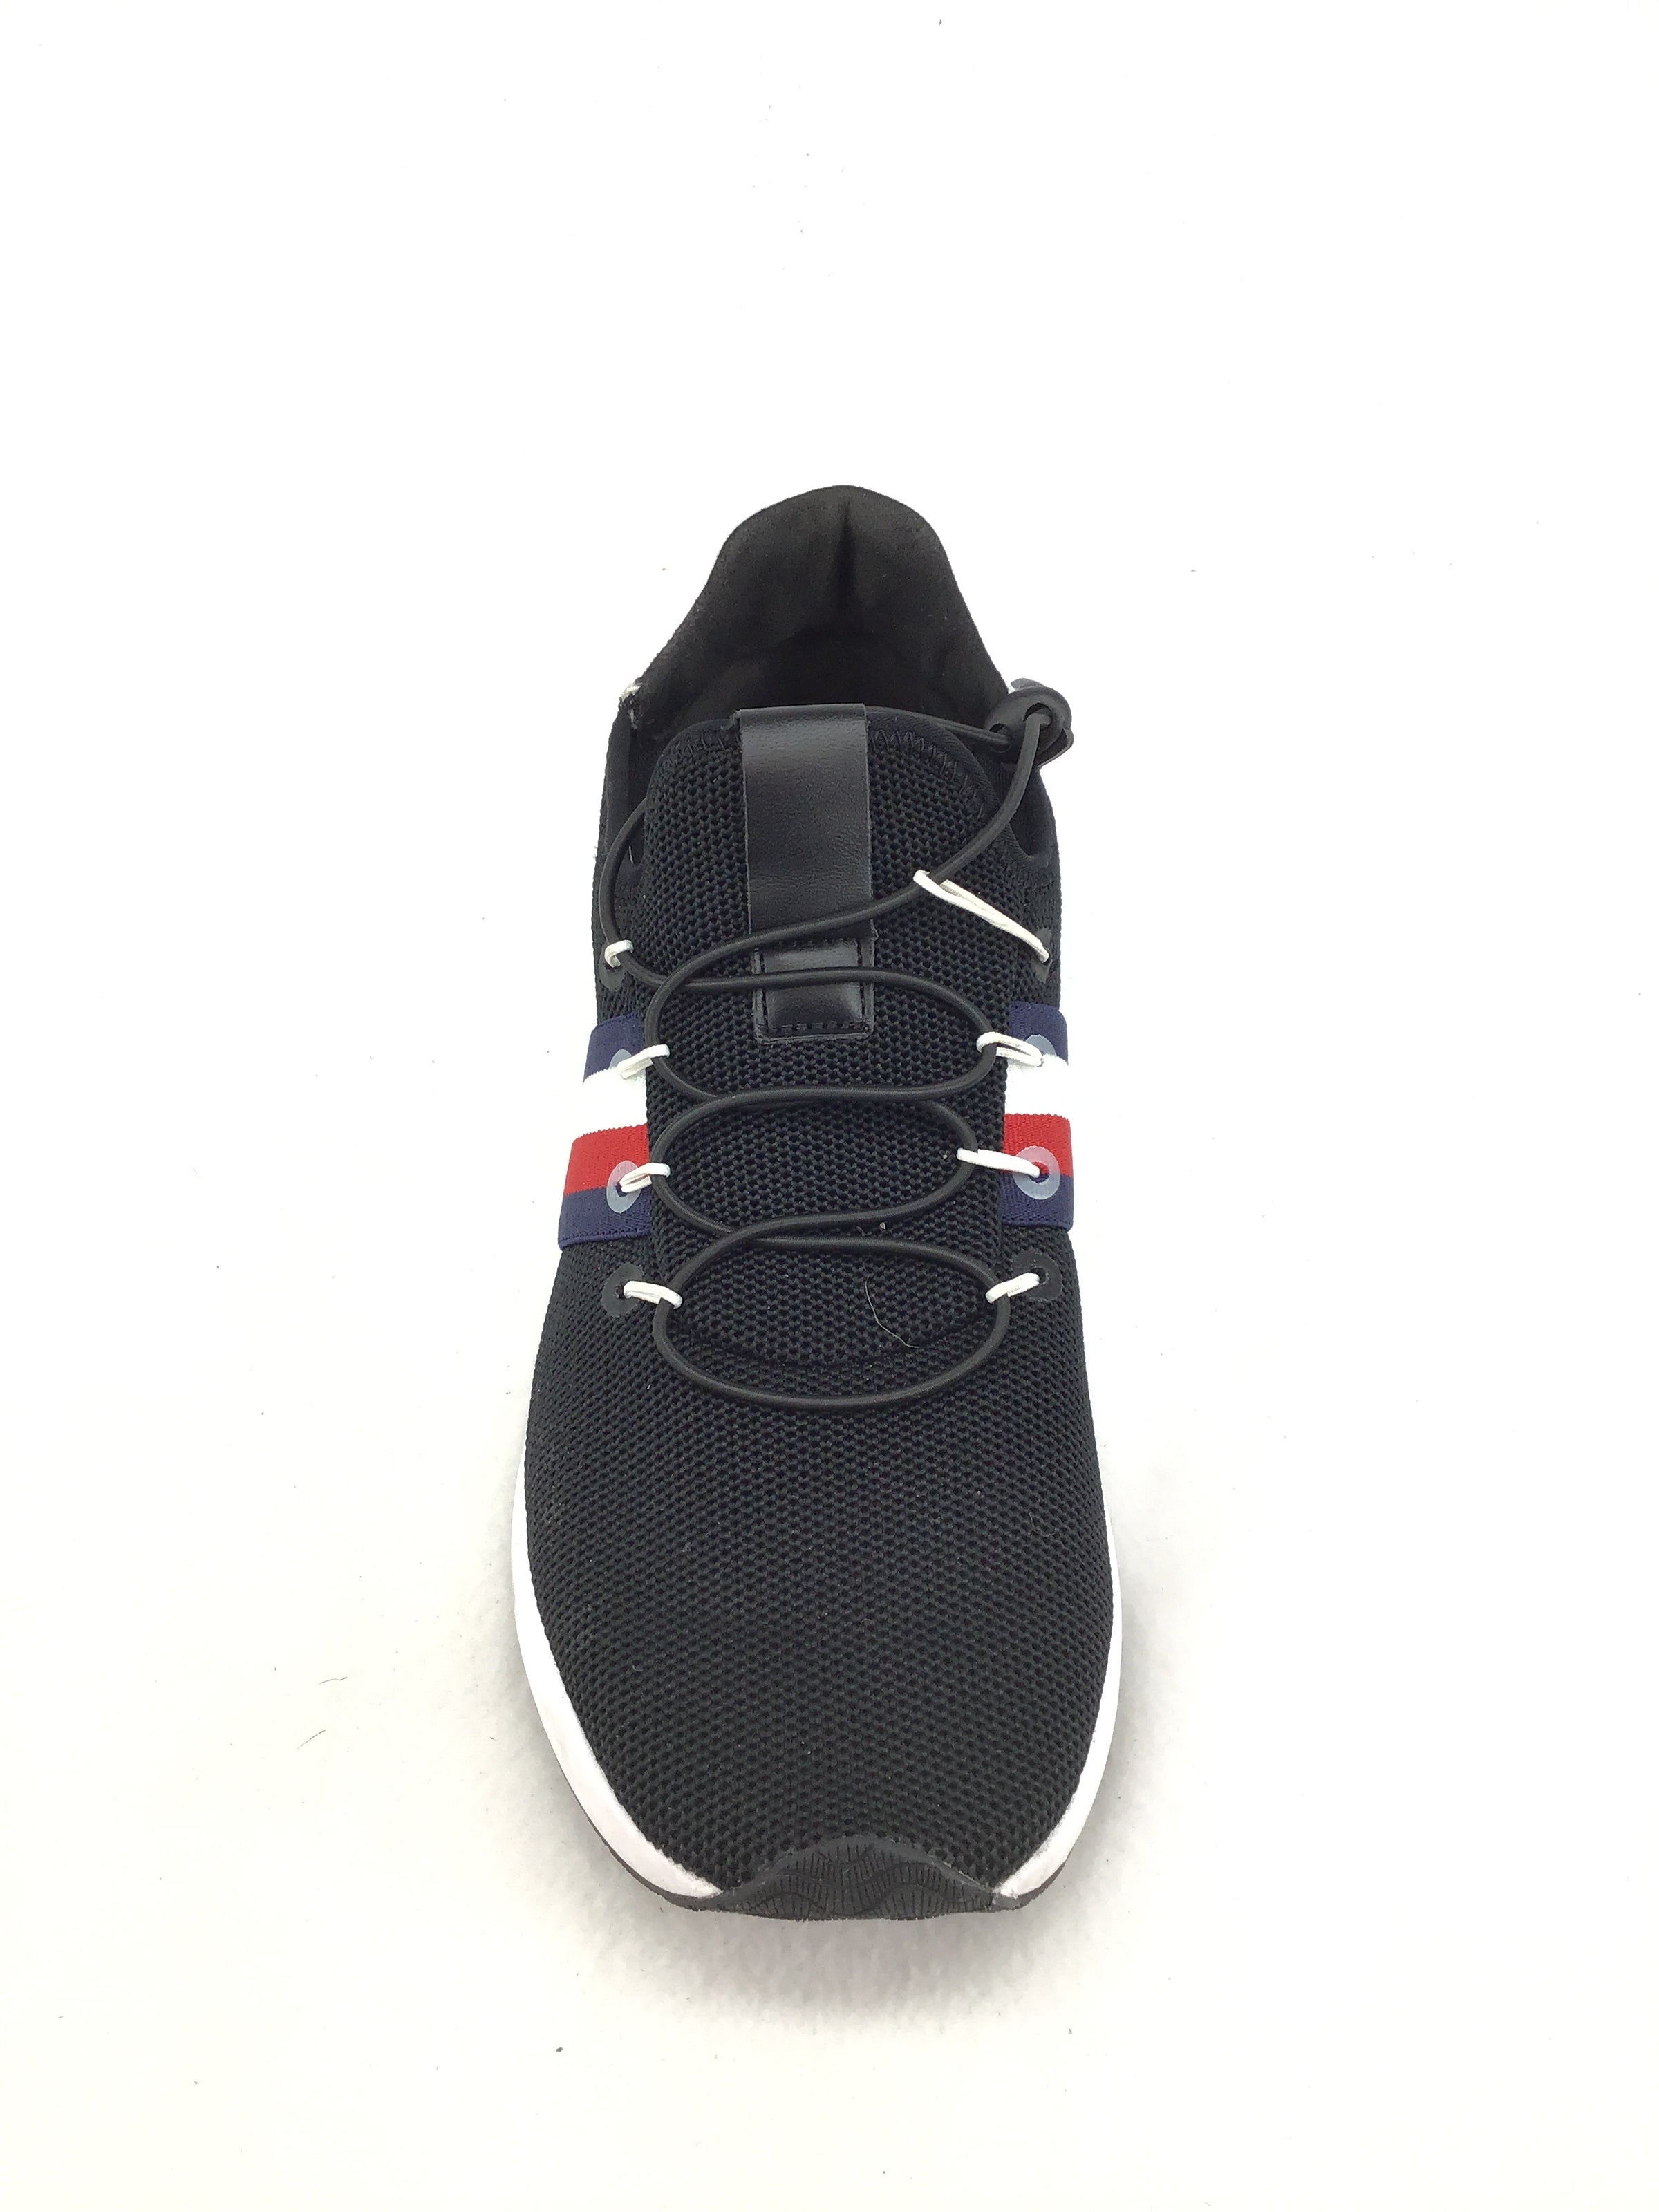 Tommy Hilfiger Rhena Sneakers Size 10M